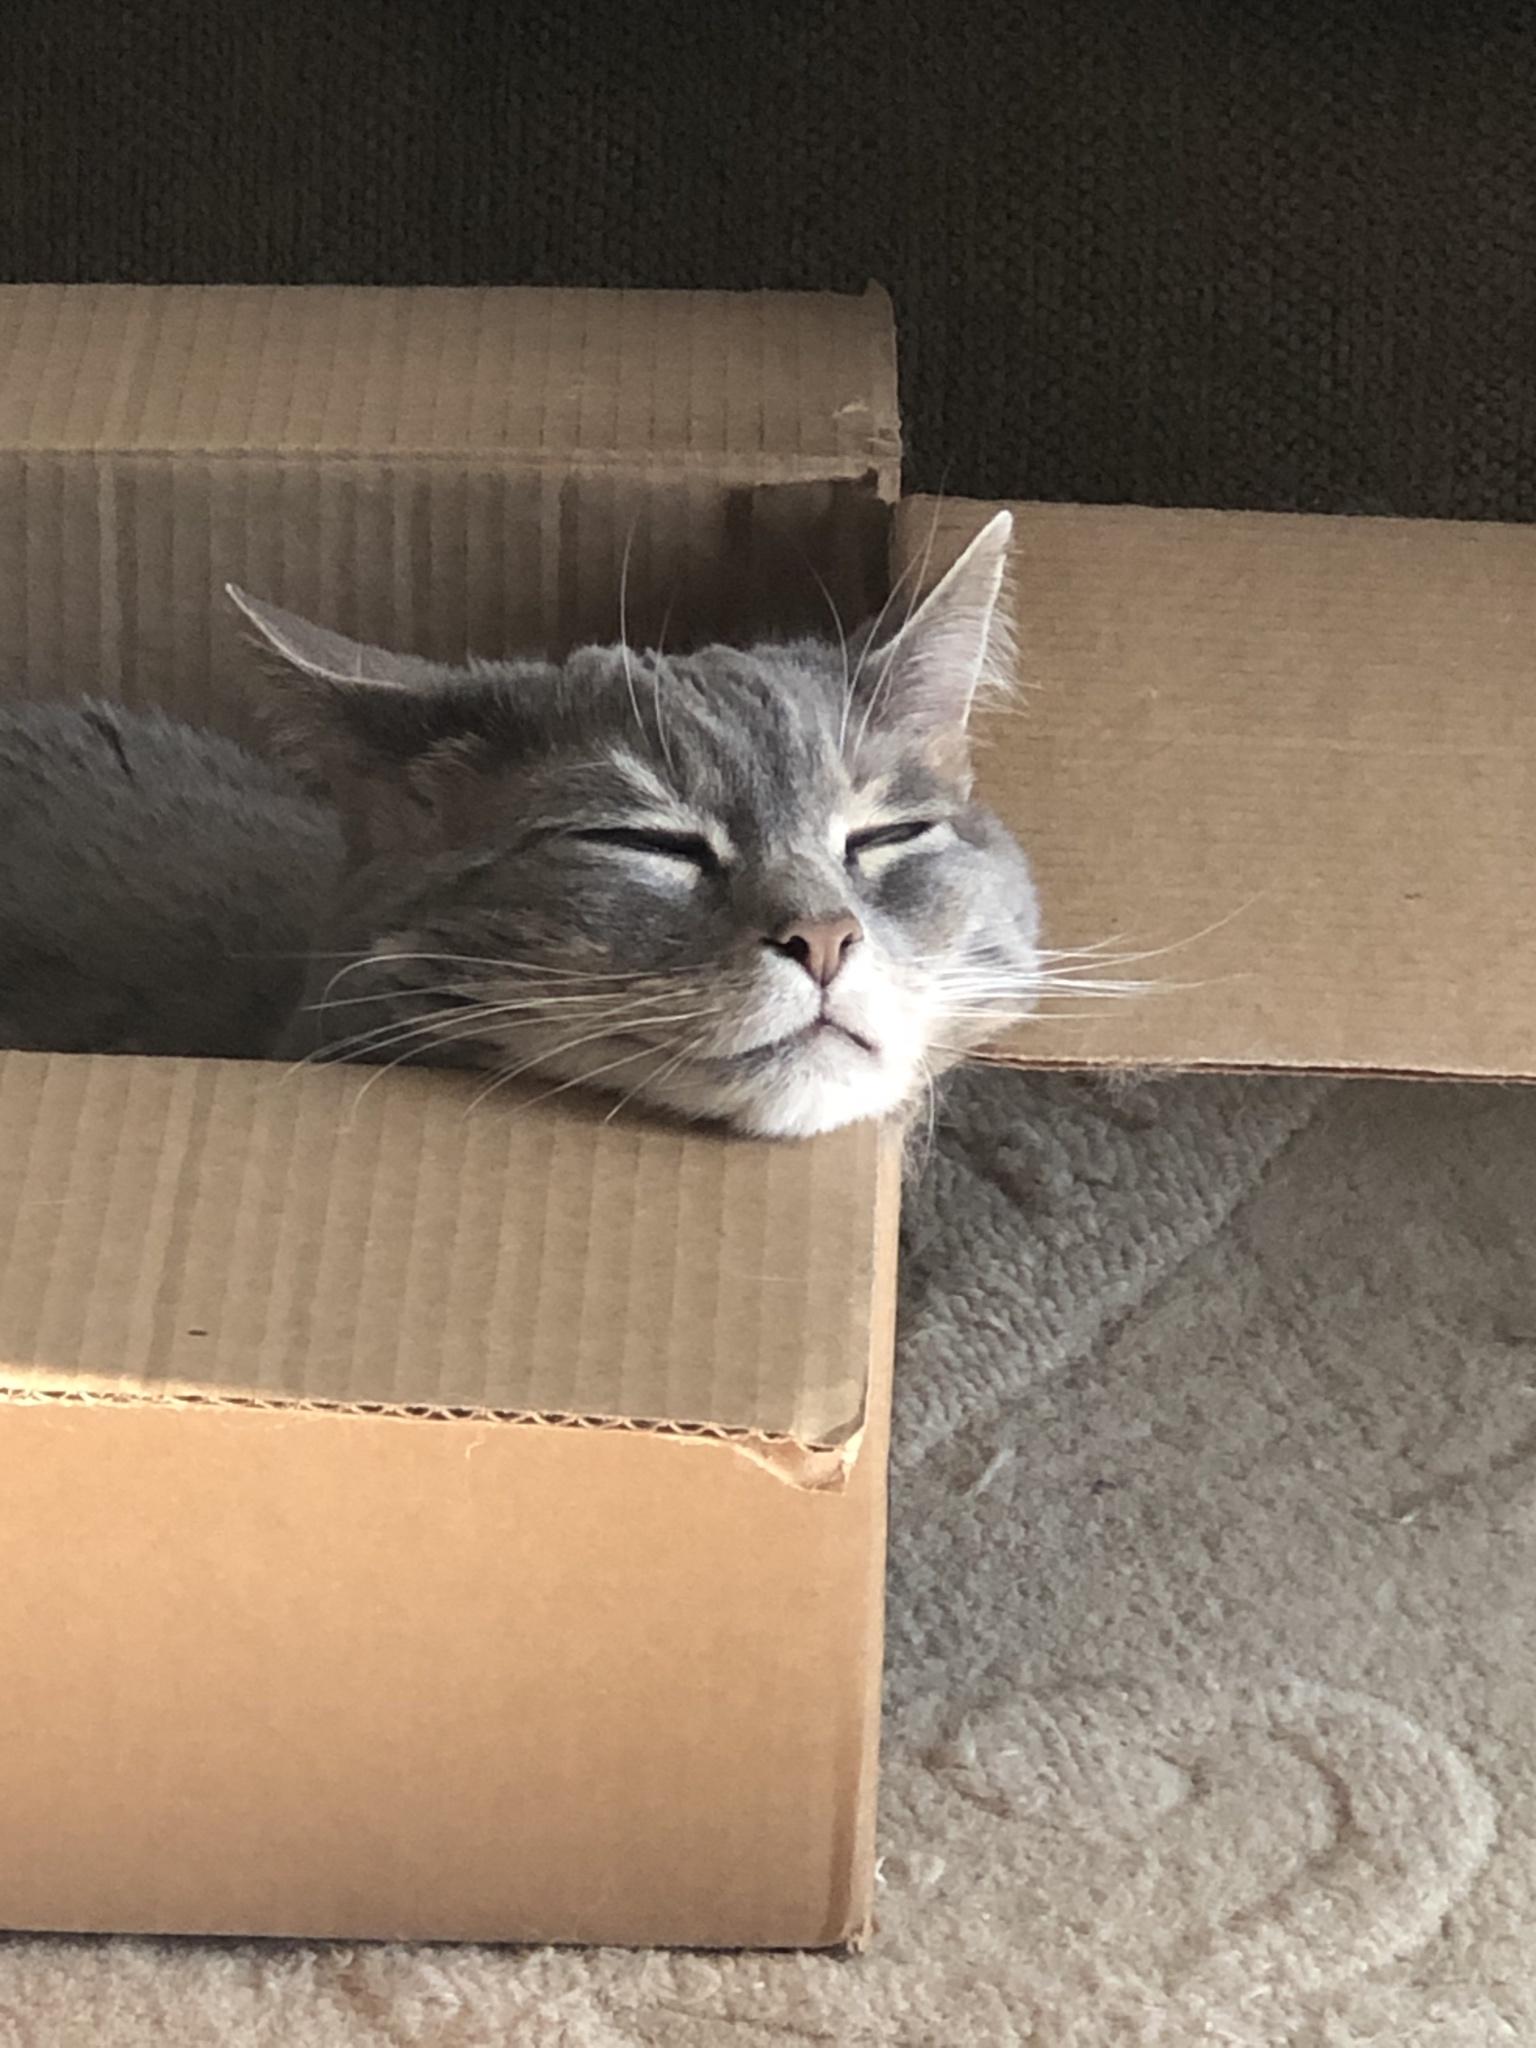 She loves falling asleep in her Amazon box